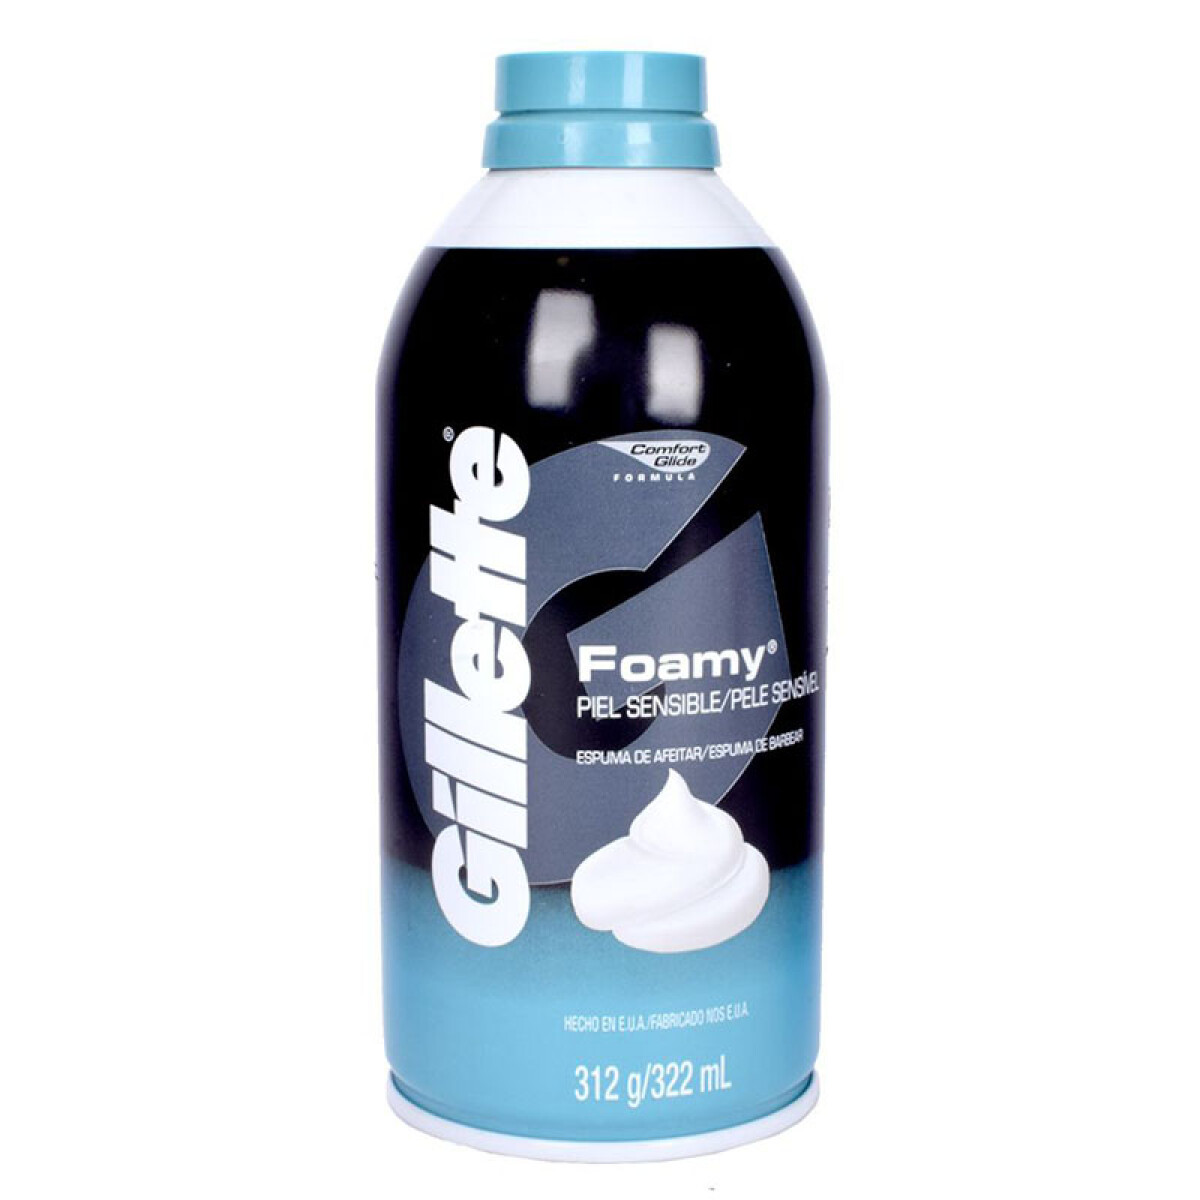 Gillette foamy espuma de afeitar - mentol 